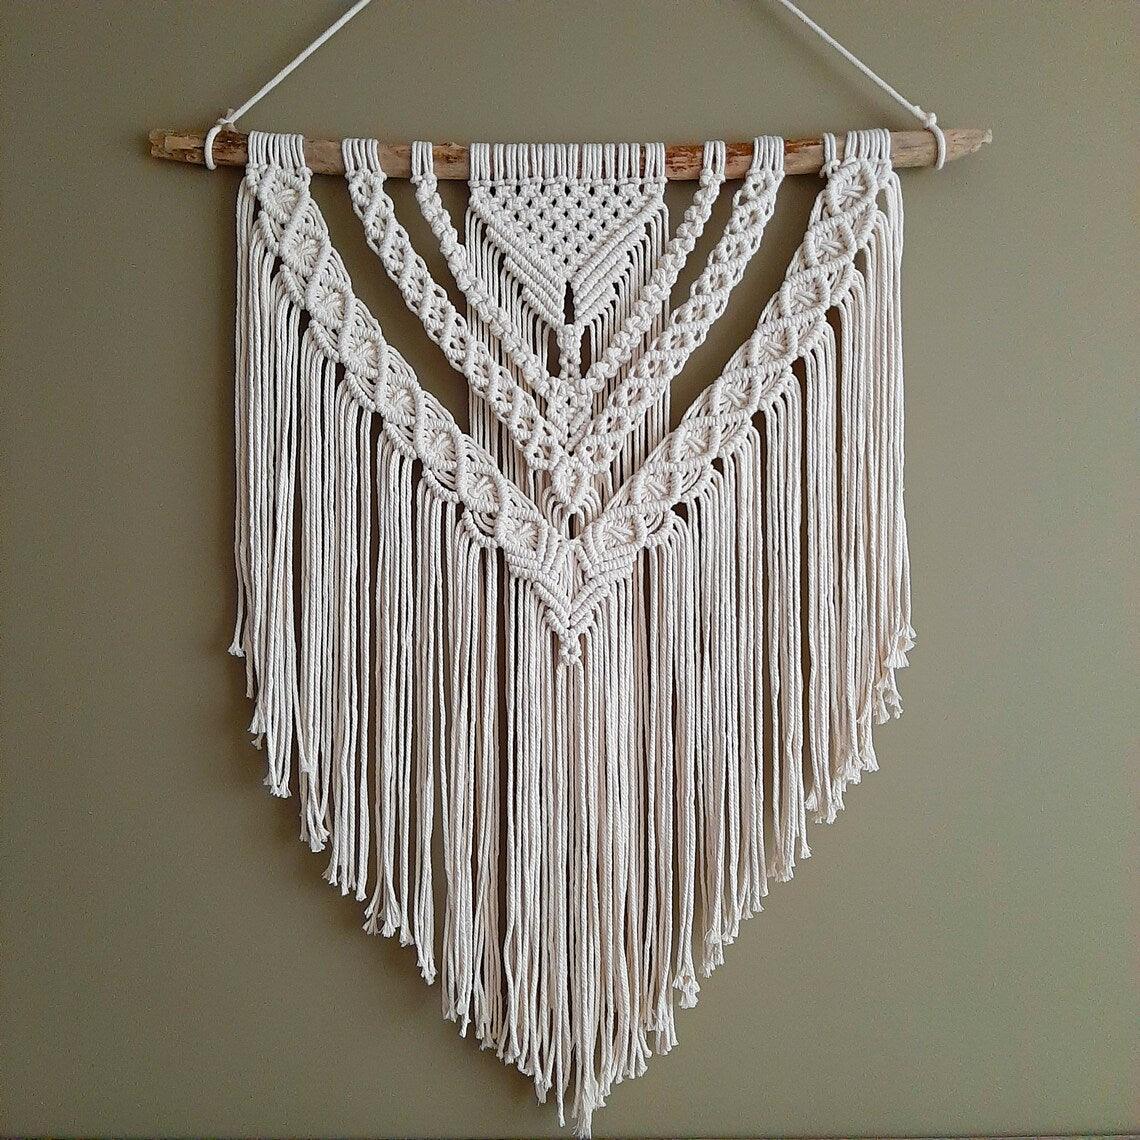 Cosmic Weave Wall Decor - Macrame Wall Hanging - KnittsKnotts